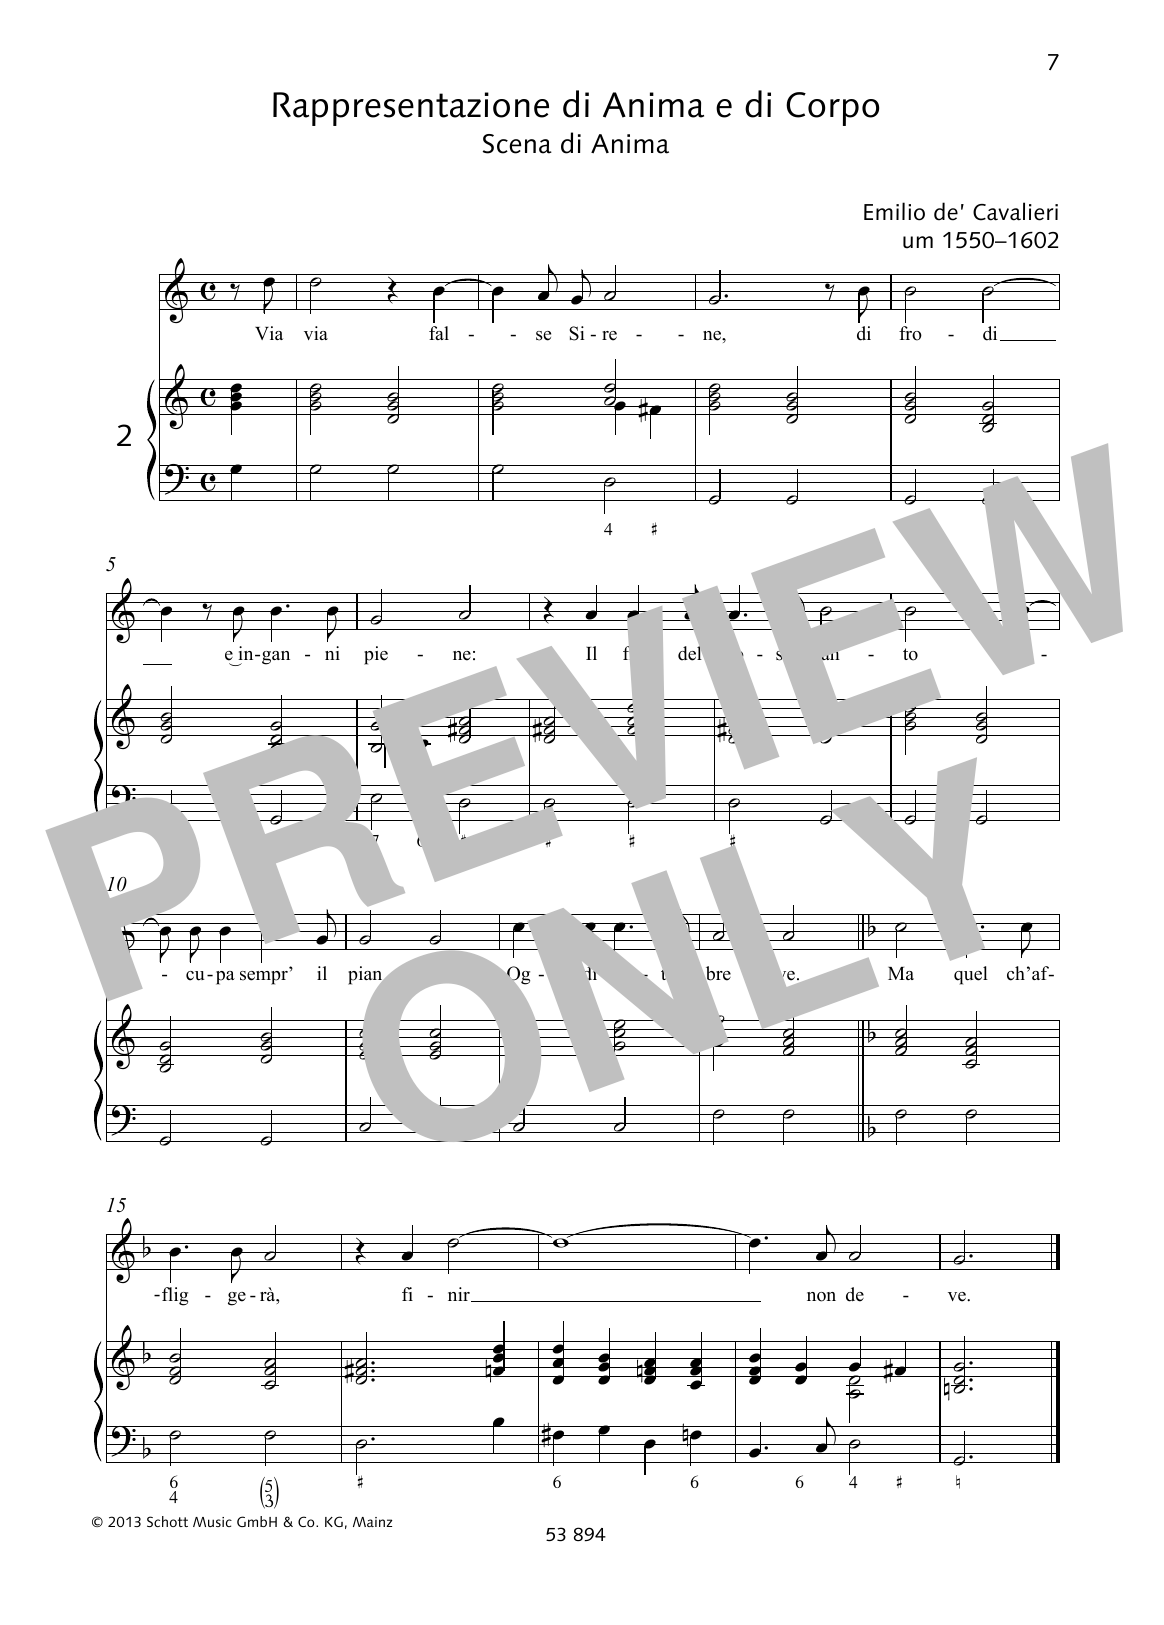 Download Emilio de Cavalieri Via via false Sirene Sheet Music and learn how to play Piano & Vocal PDF digital score in minutes